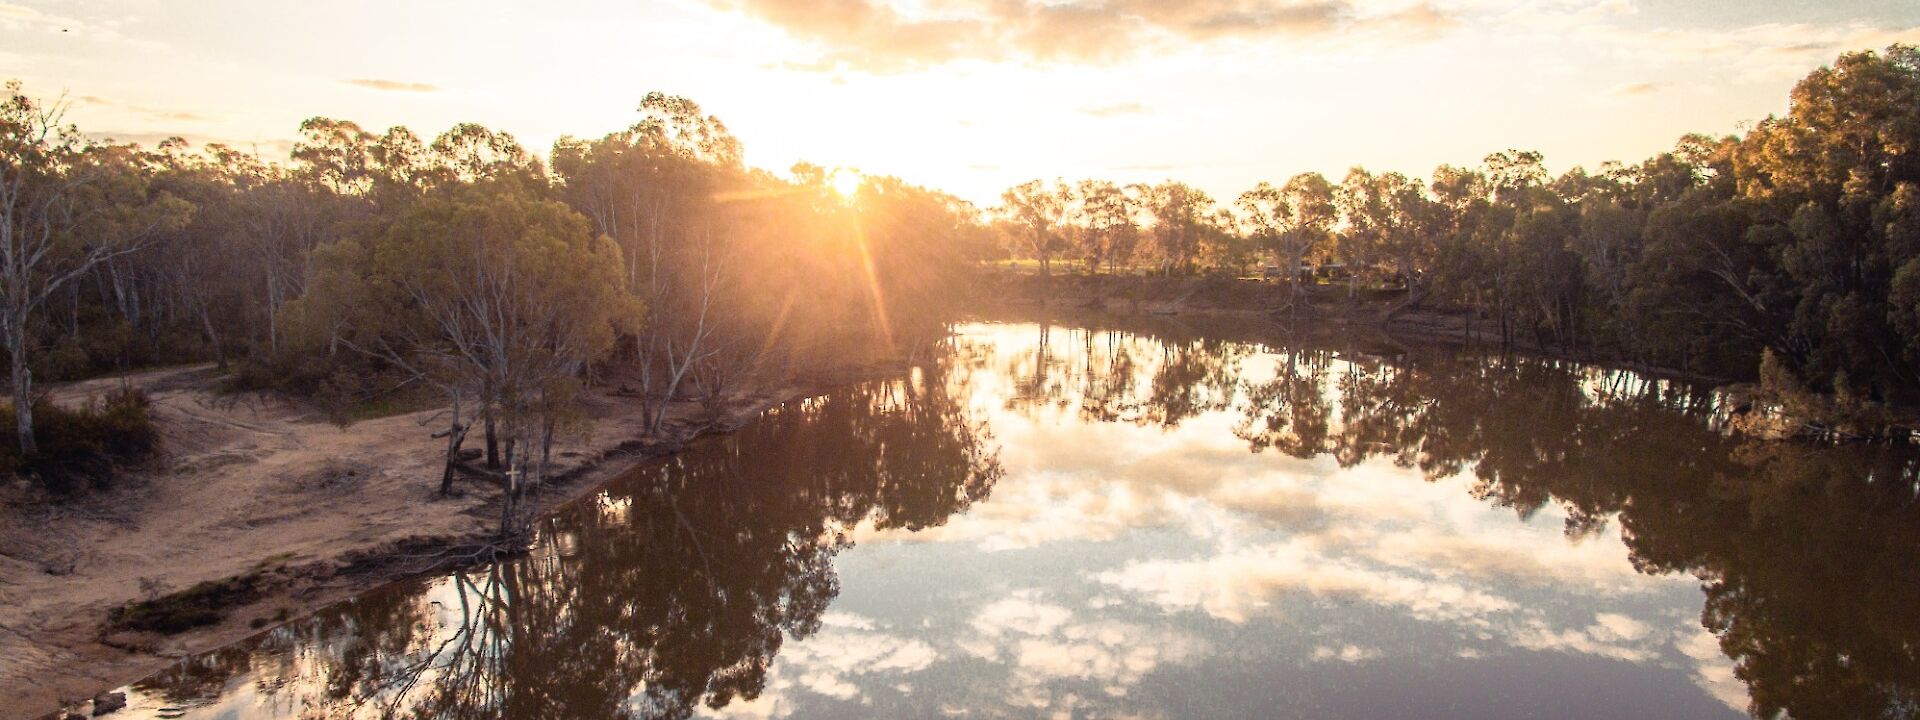 Sunset over Echuca, Australia. Tim Davies@Unsplash